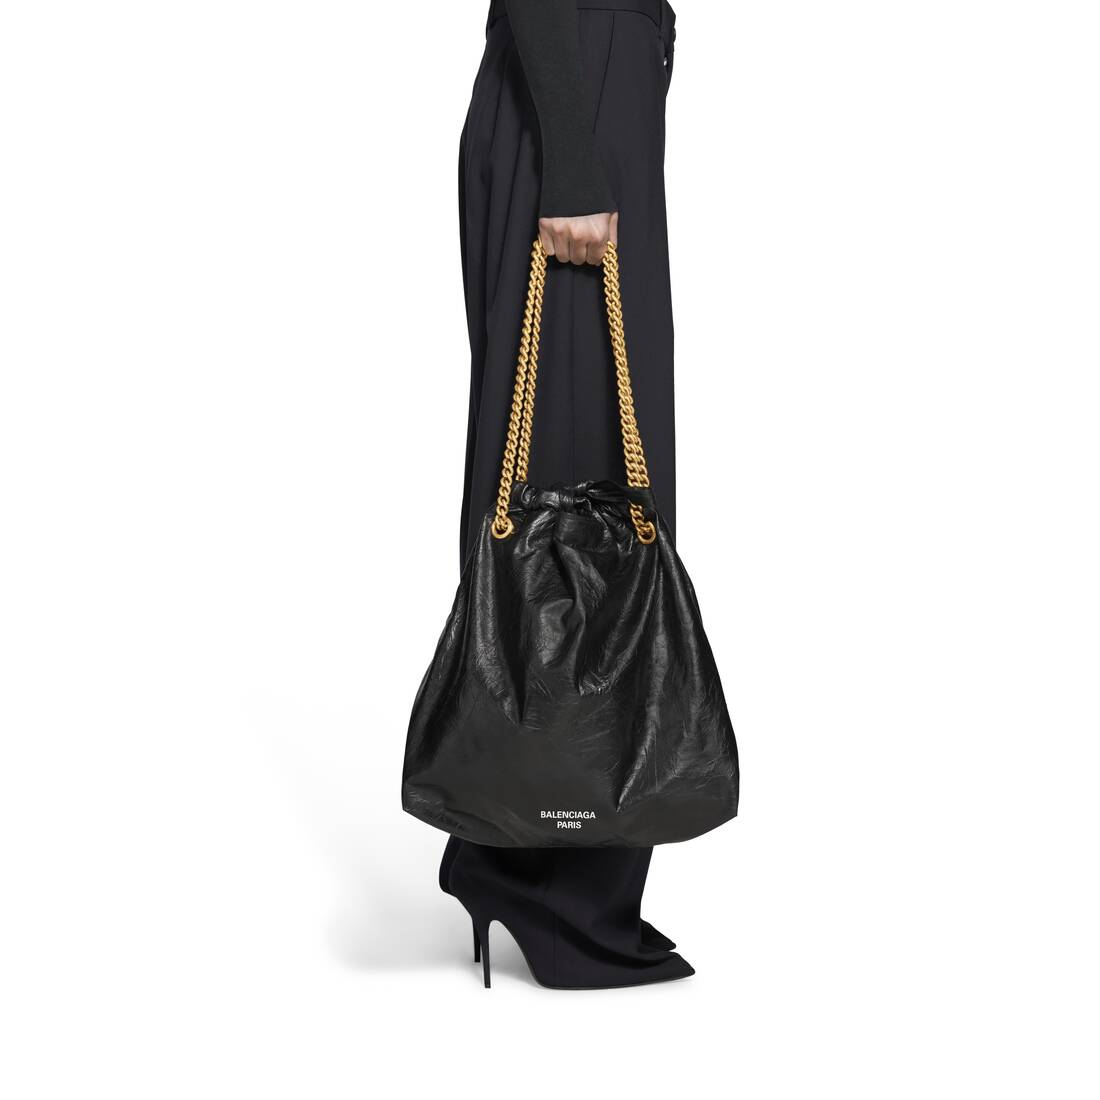 Balenciaga Women's Crush Medium Tote Bag